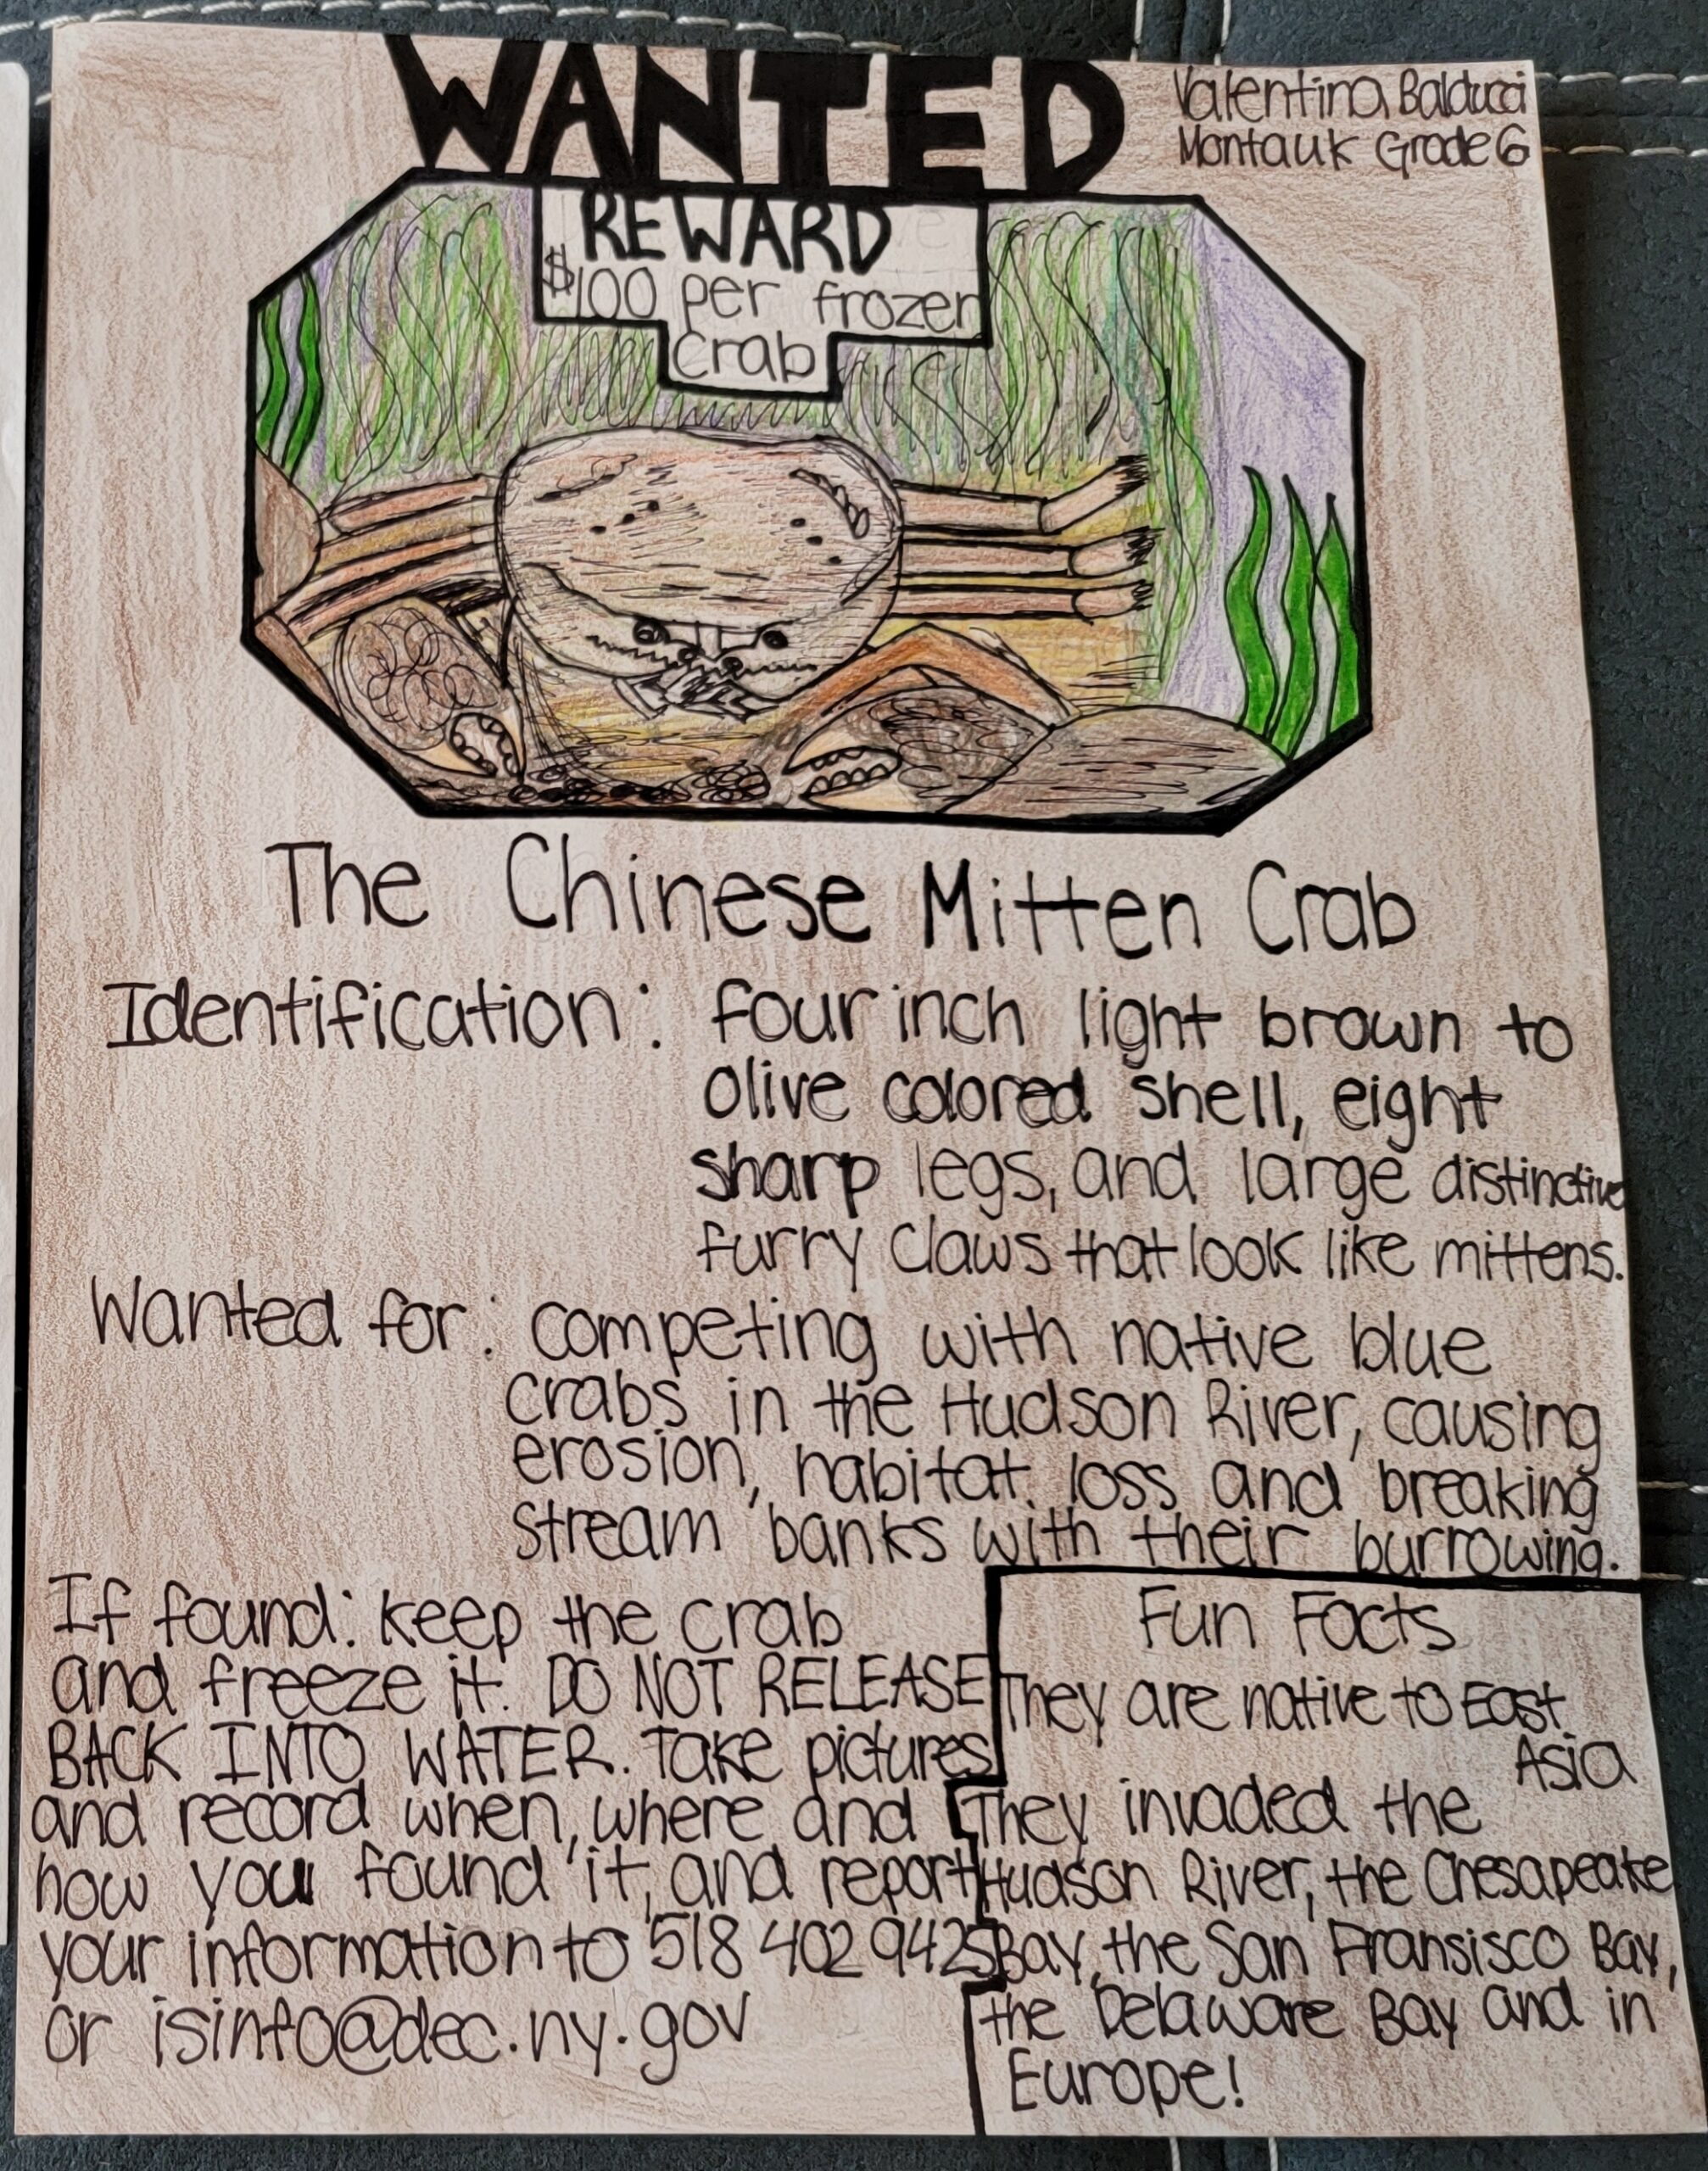 The winning poster by Montauk School sixth-grader Valentina Balducci.